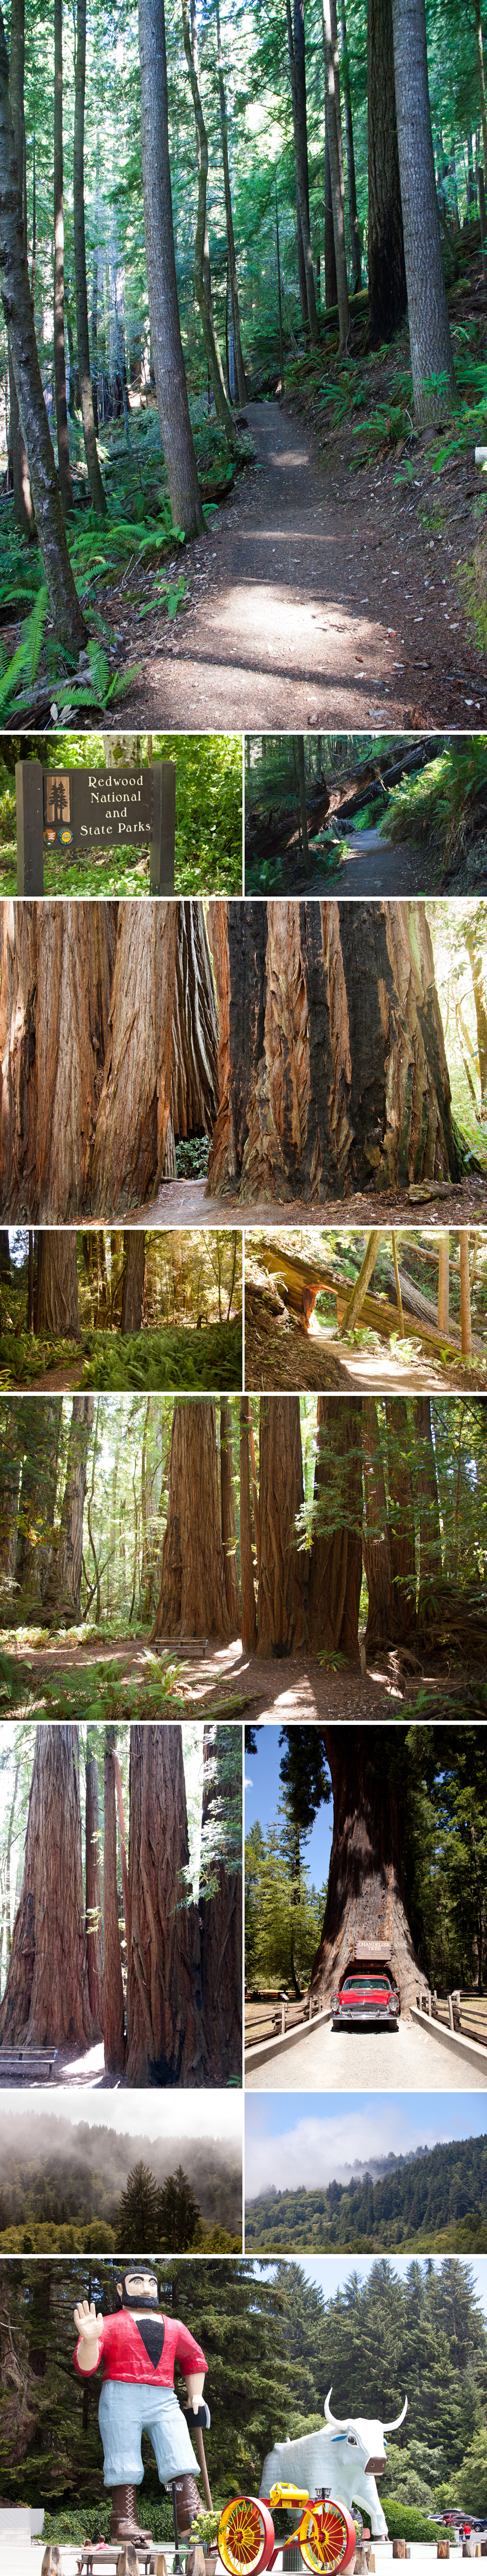 redwoodscollage